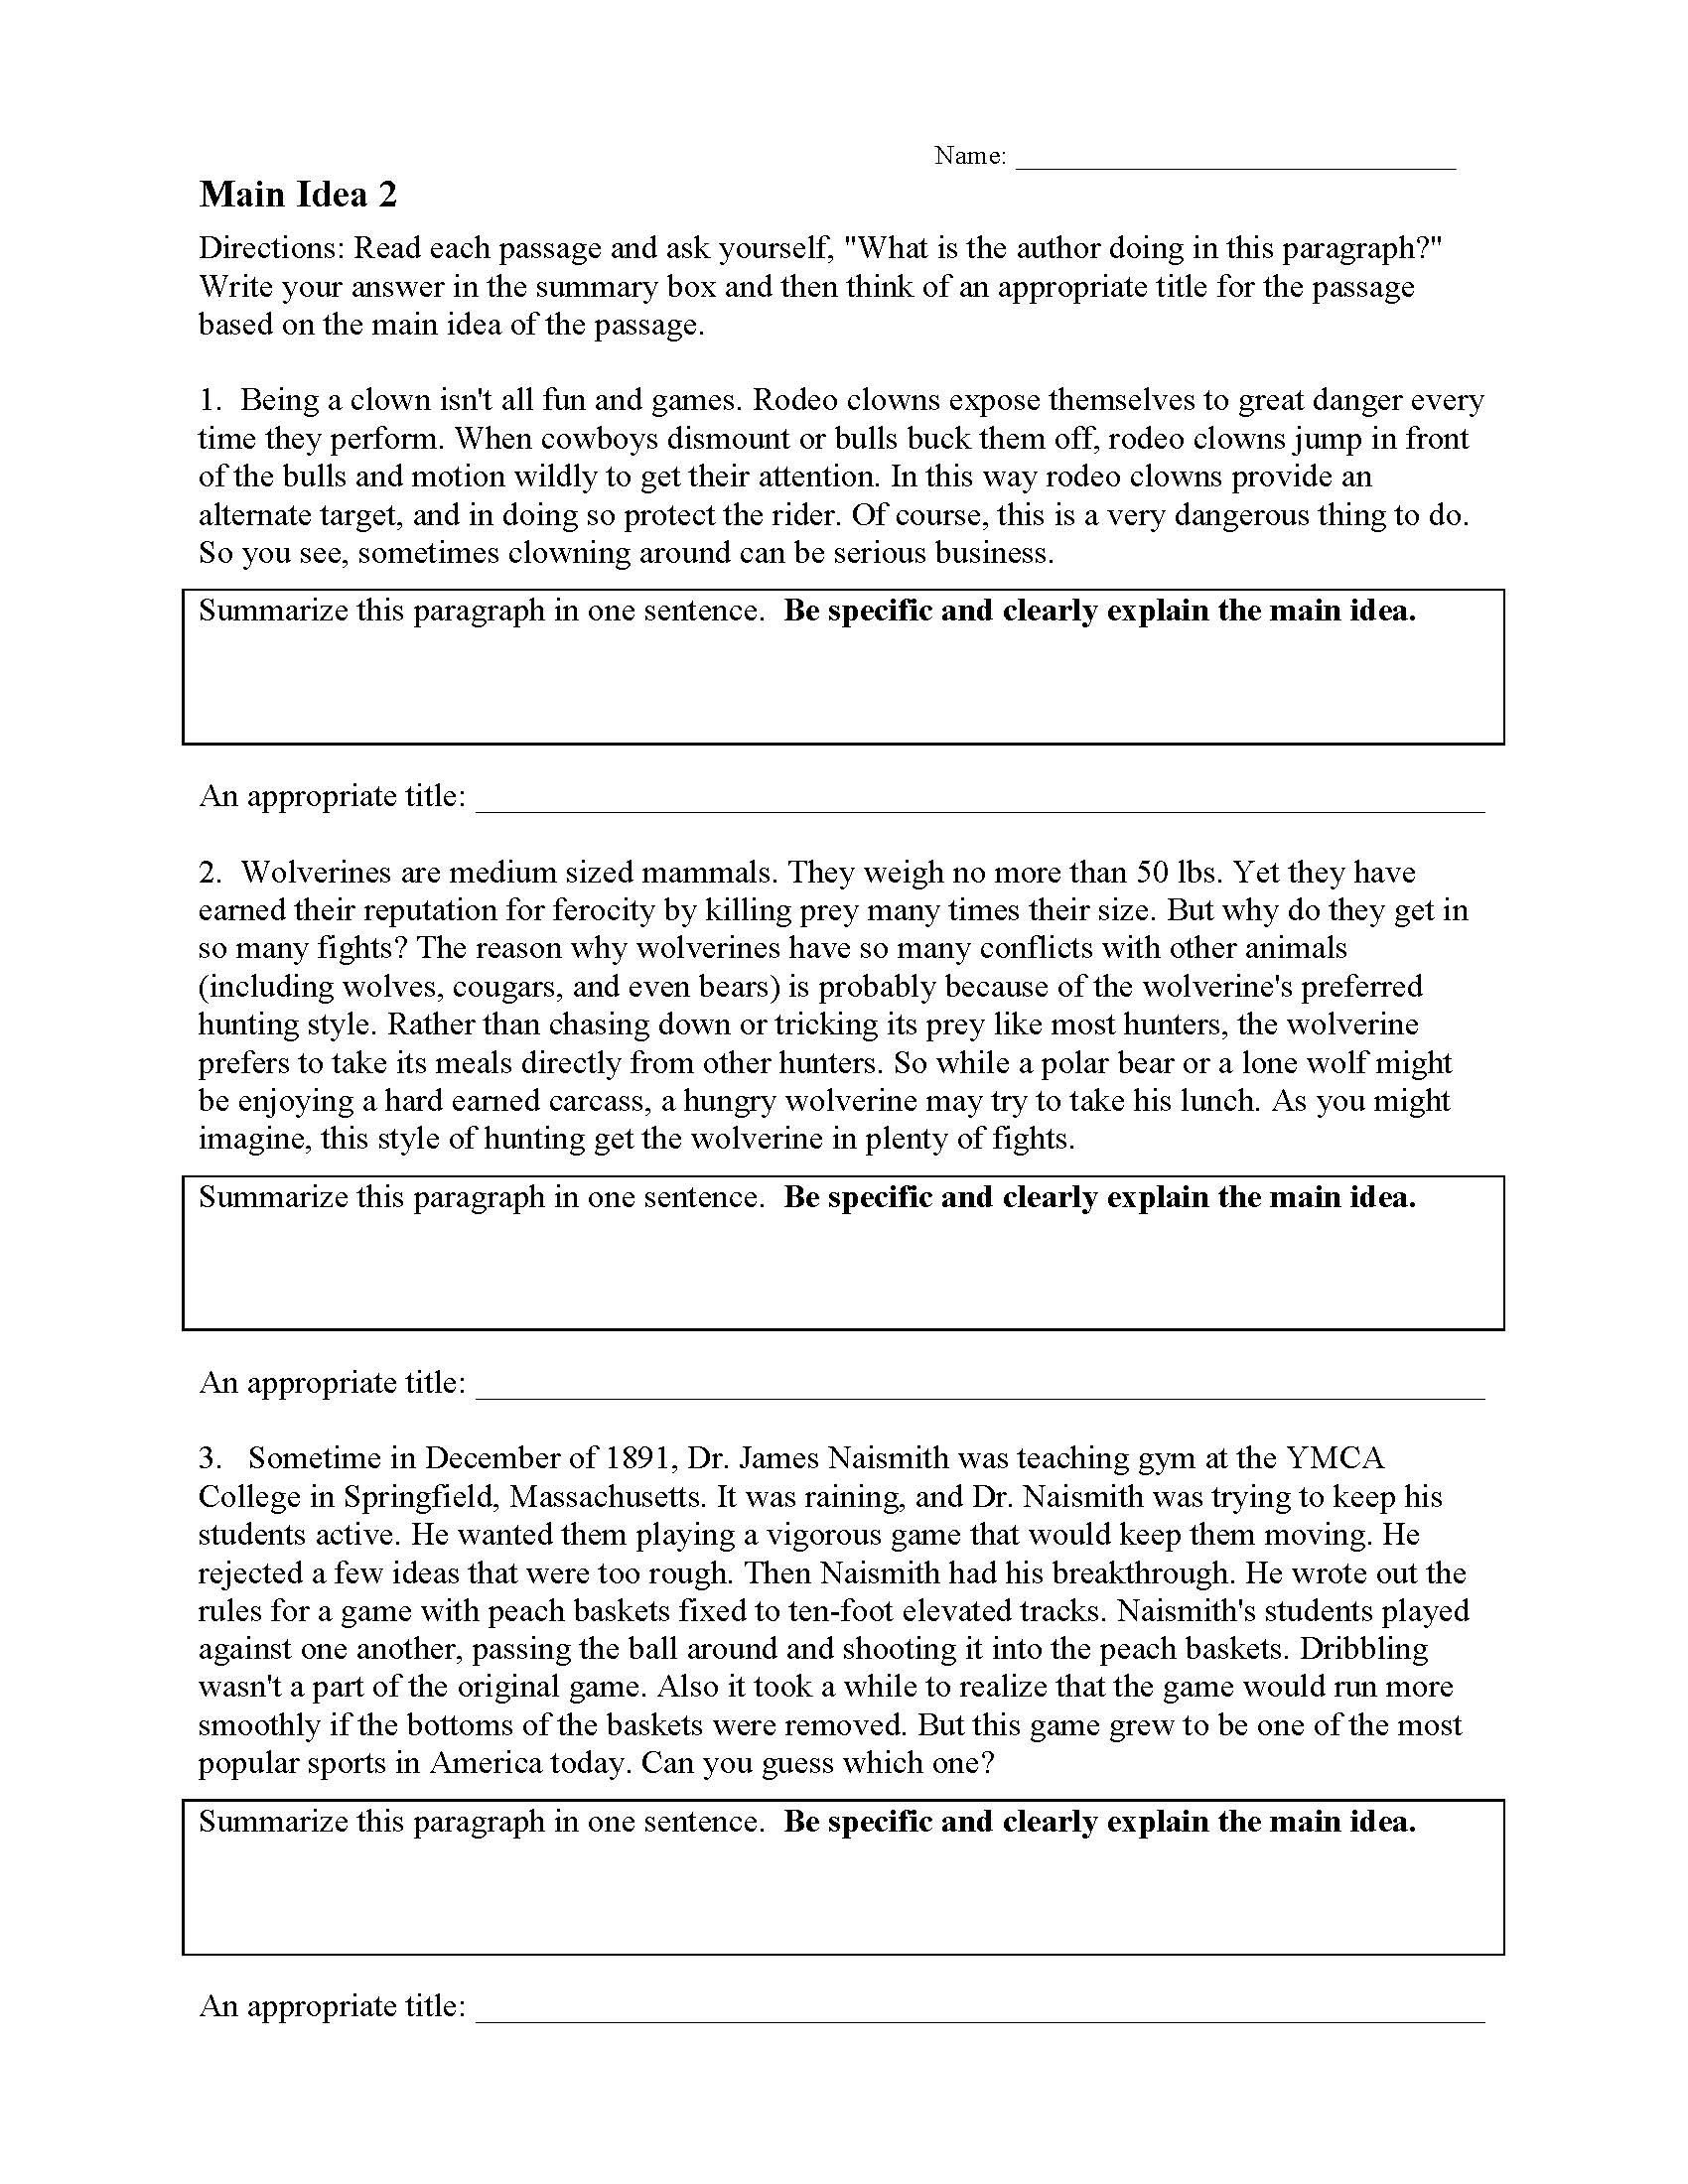 Main Idea Worksheet 4 Main Idea Worksheets